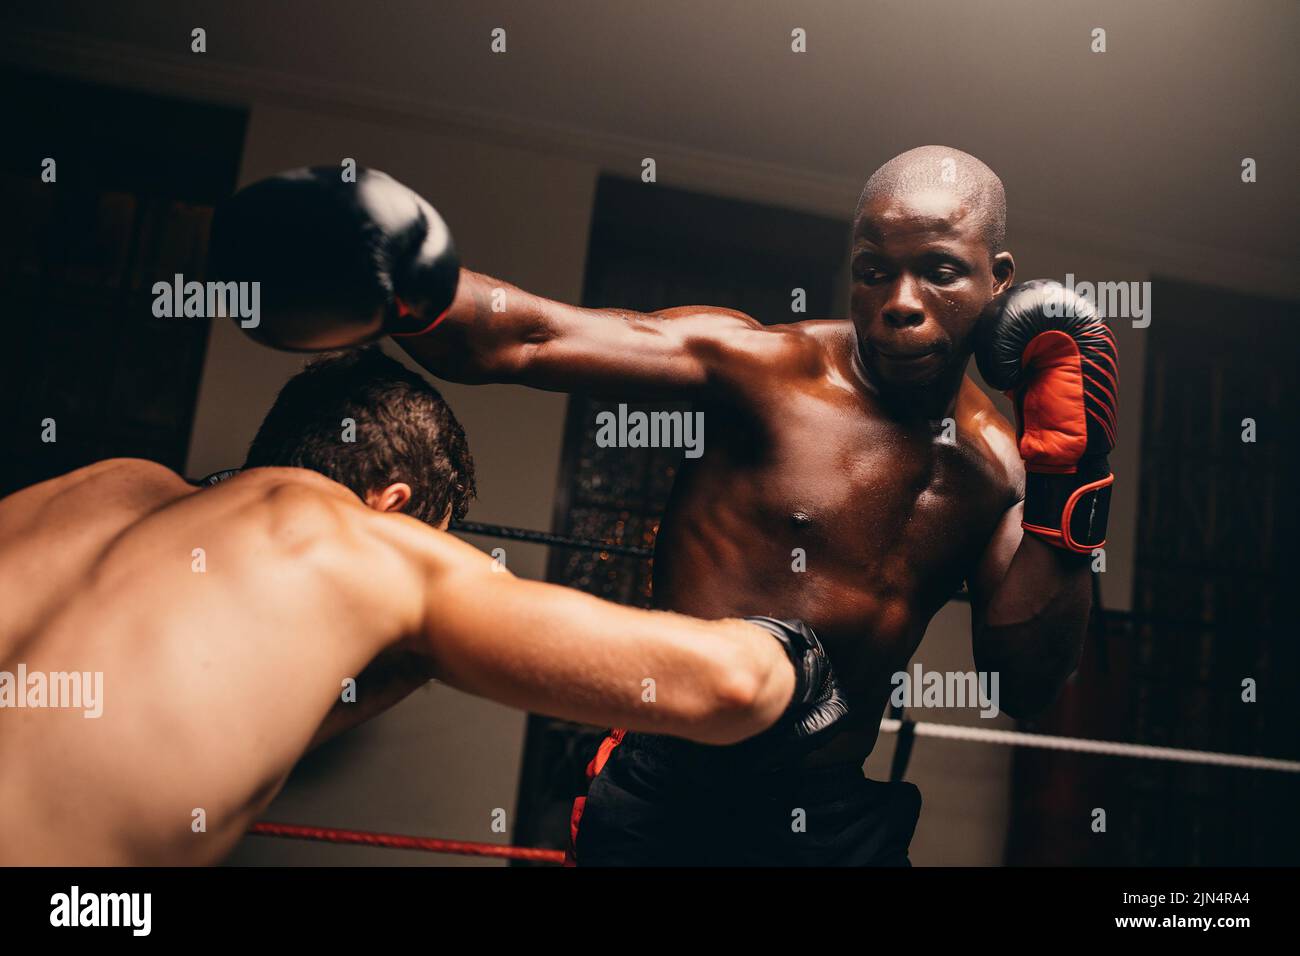 Dos luchadores masculinos disputando un partido en un ring de boxeo. Dos jóvenes boxeadores tirándose unos a otros en un gimnasio. Foto de stock